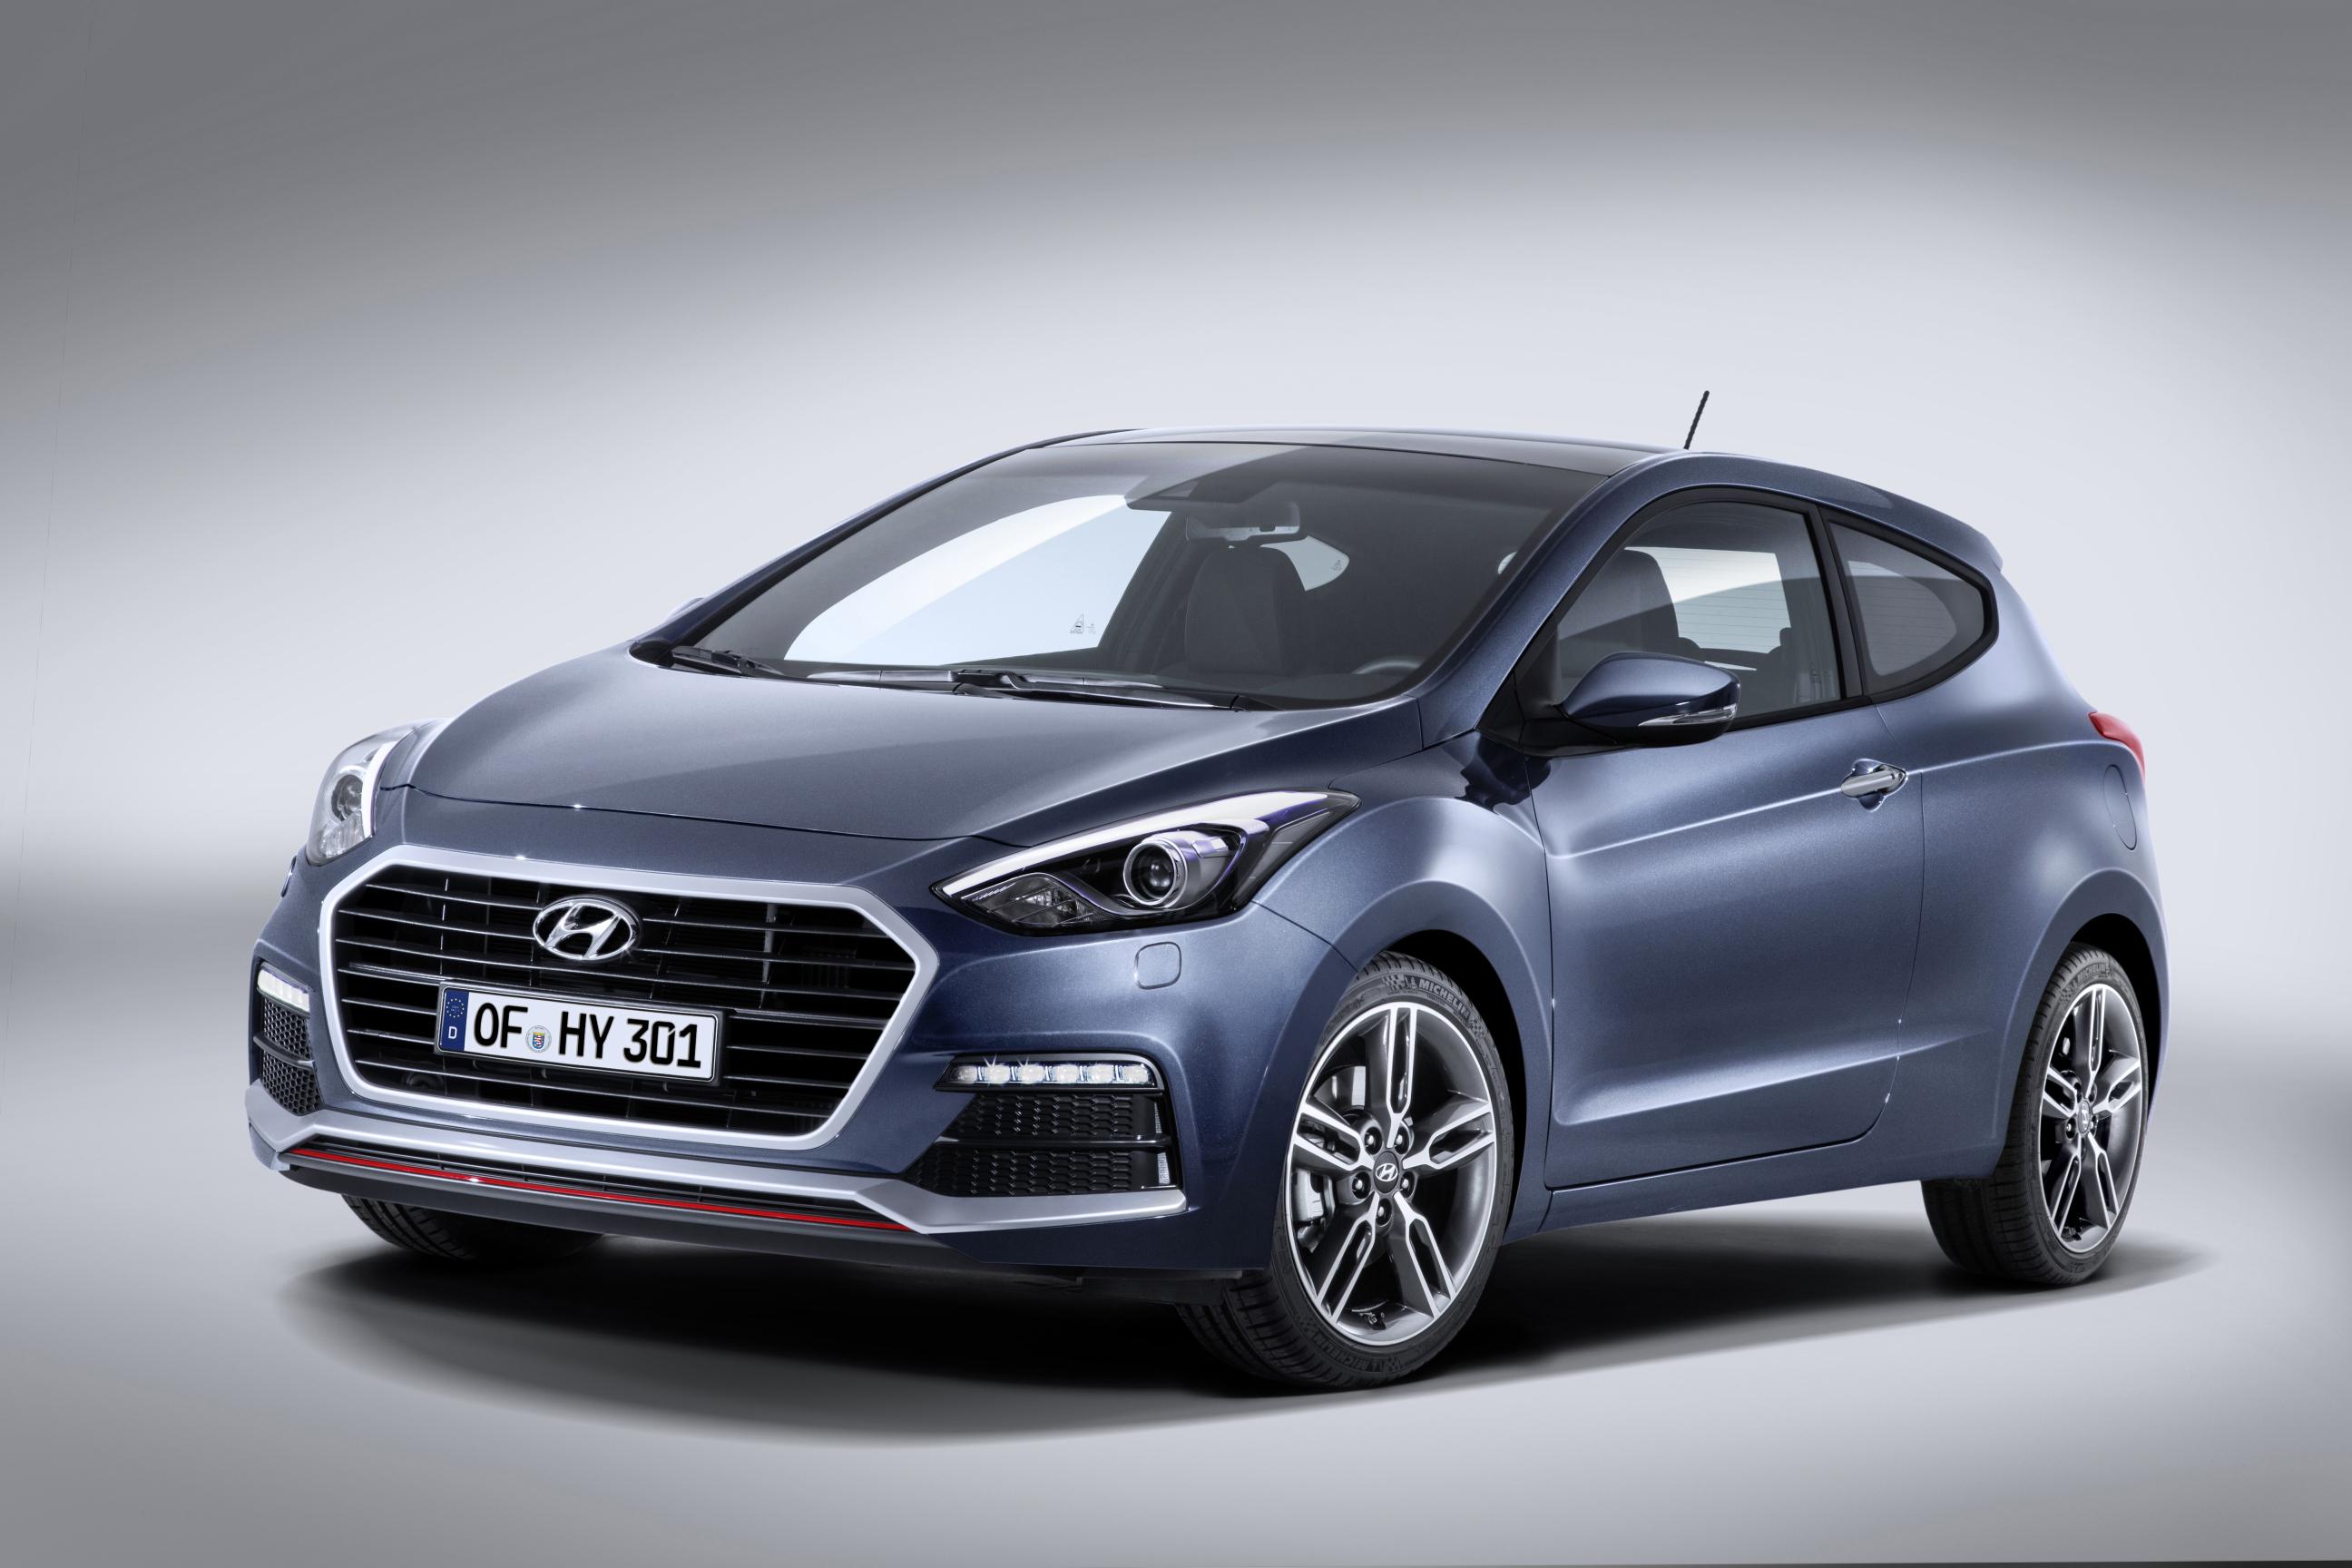 News - 2015 Hyundai i30 Updates Announced | CarShowroom.com.au